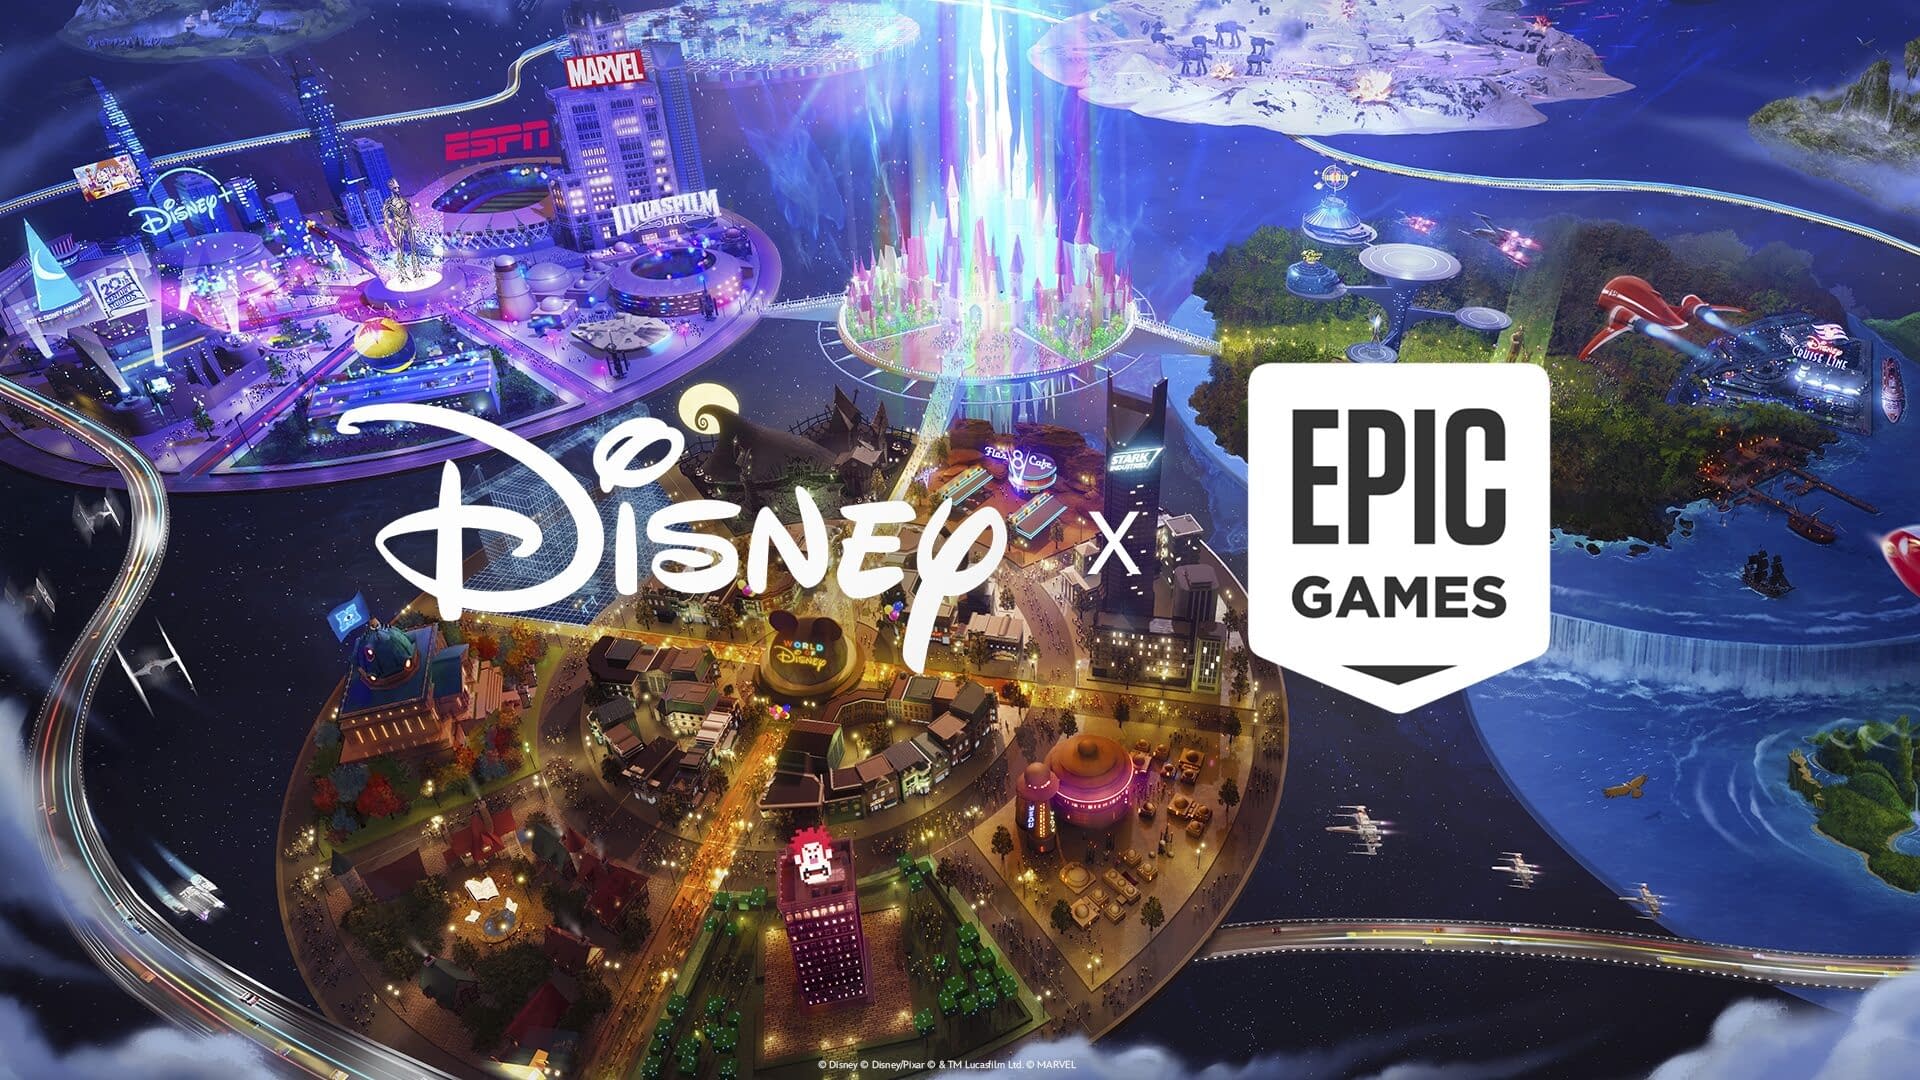 Epic Games 1.5 Billion Dollar Investment from Disney